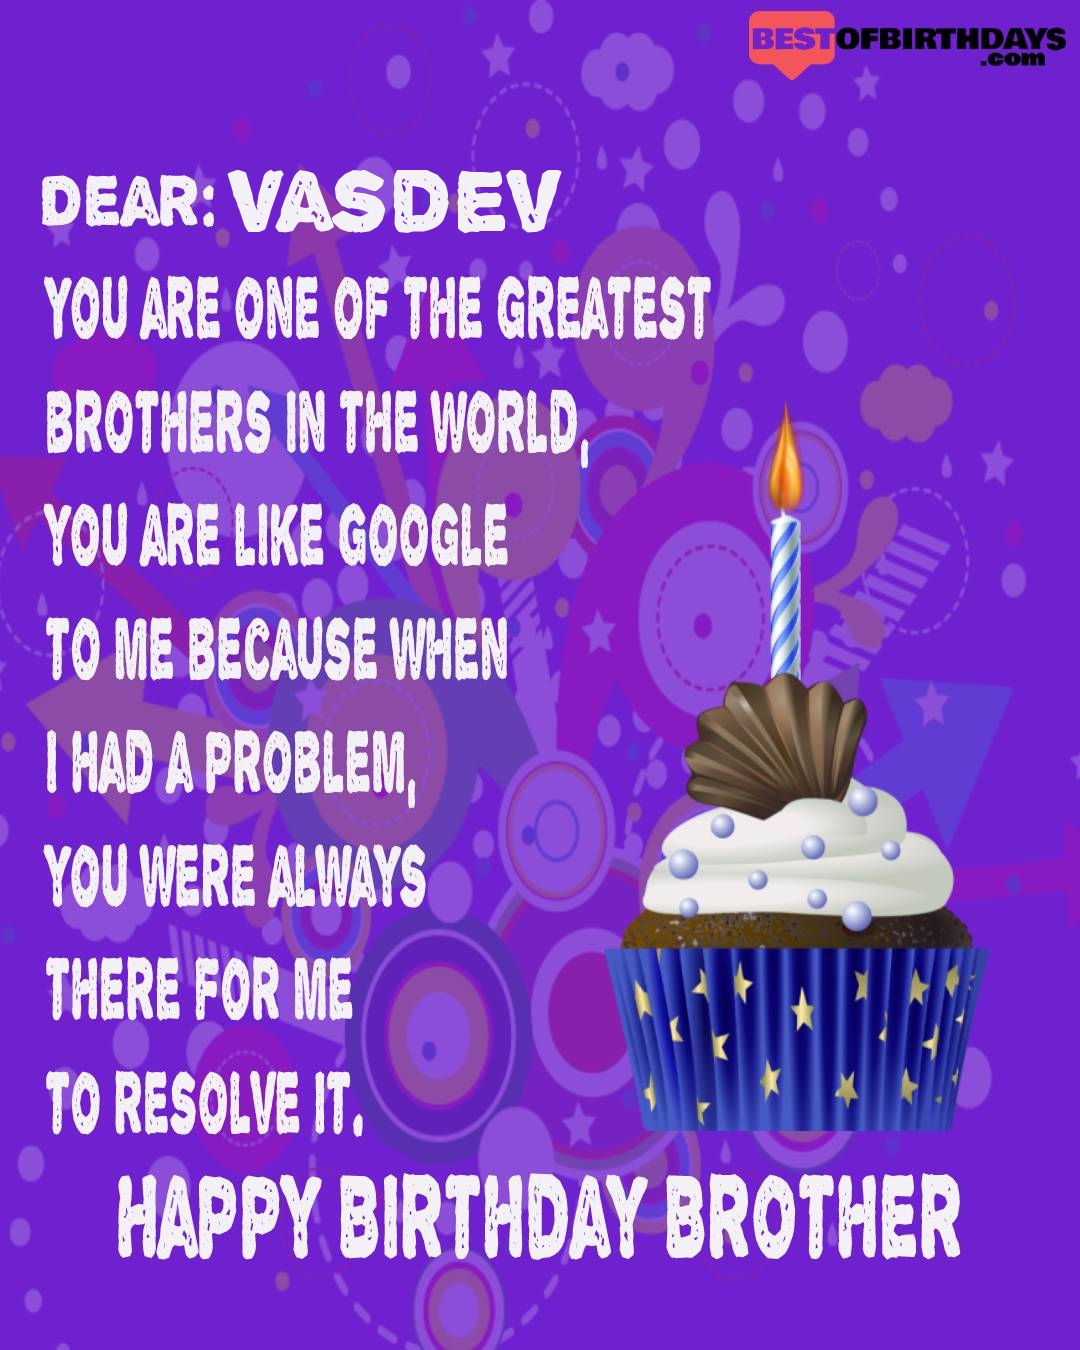 Happy birthday vasdev bhai brother bro